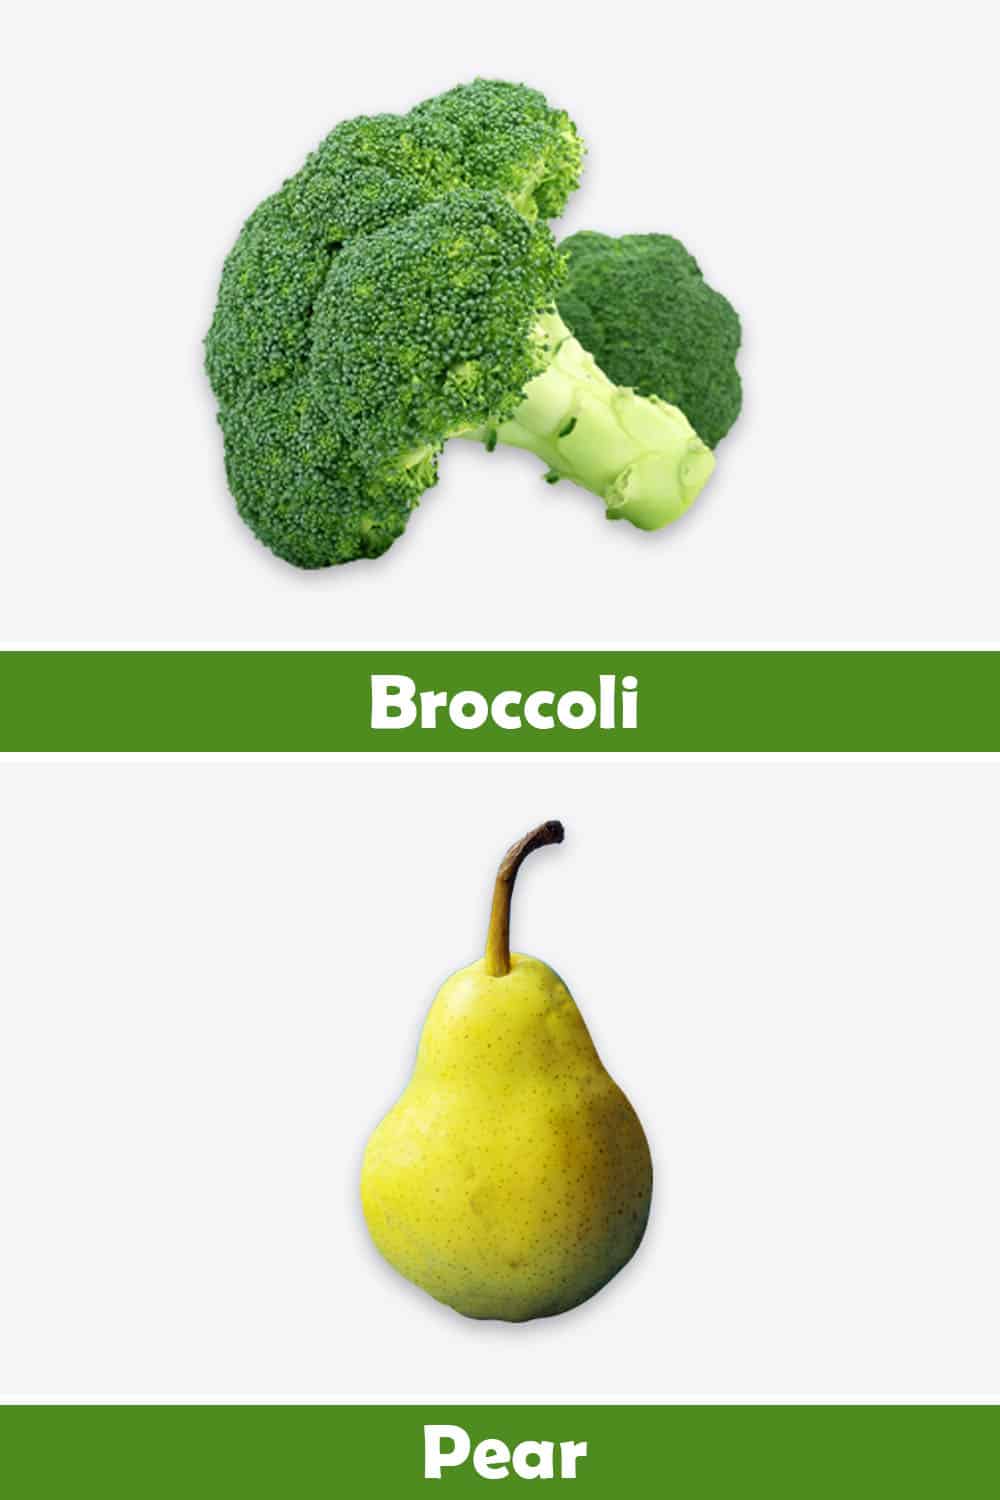 BROCCOLI AND PEAR